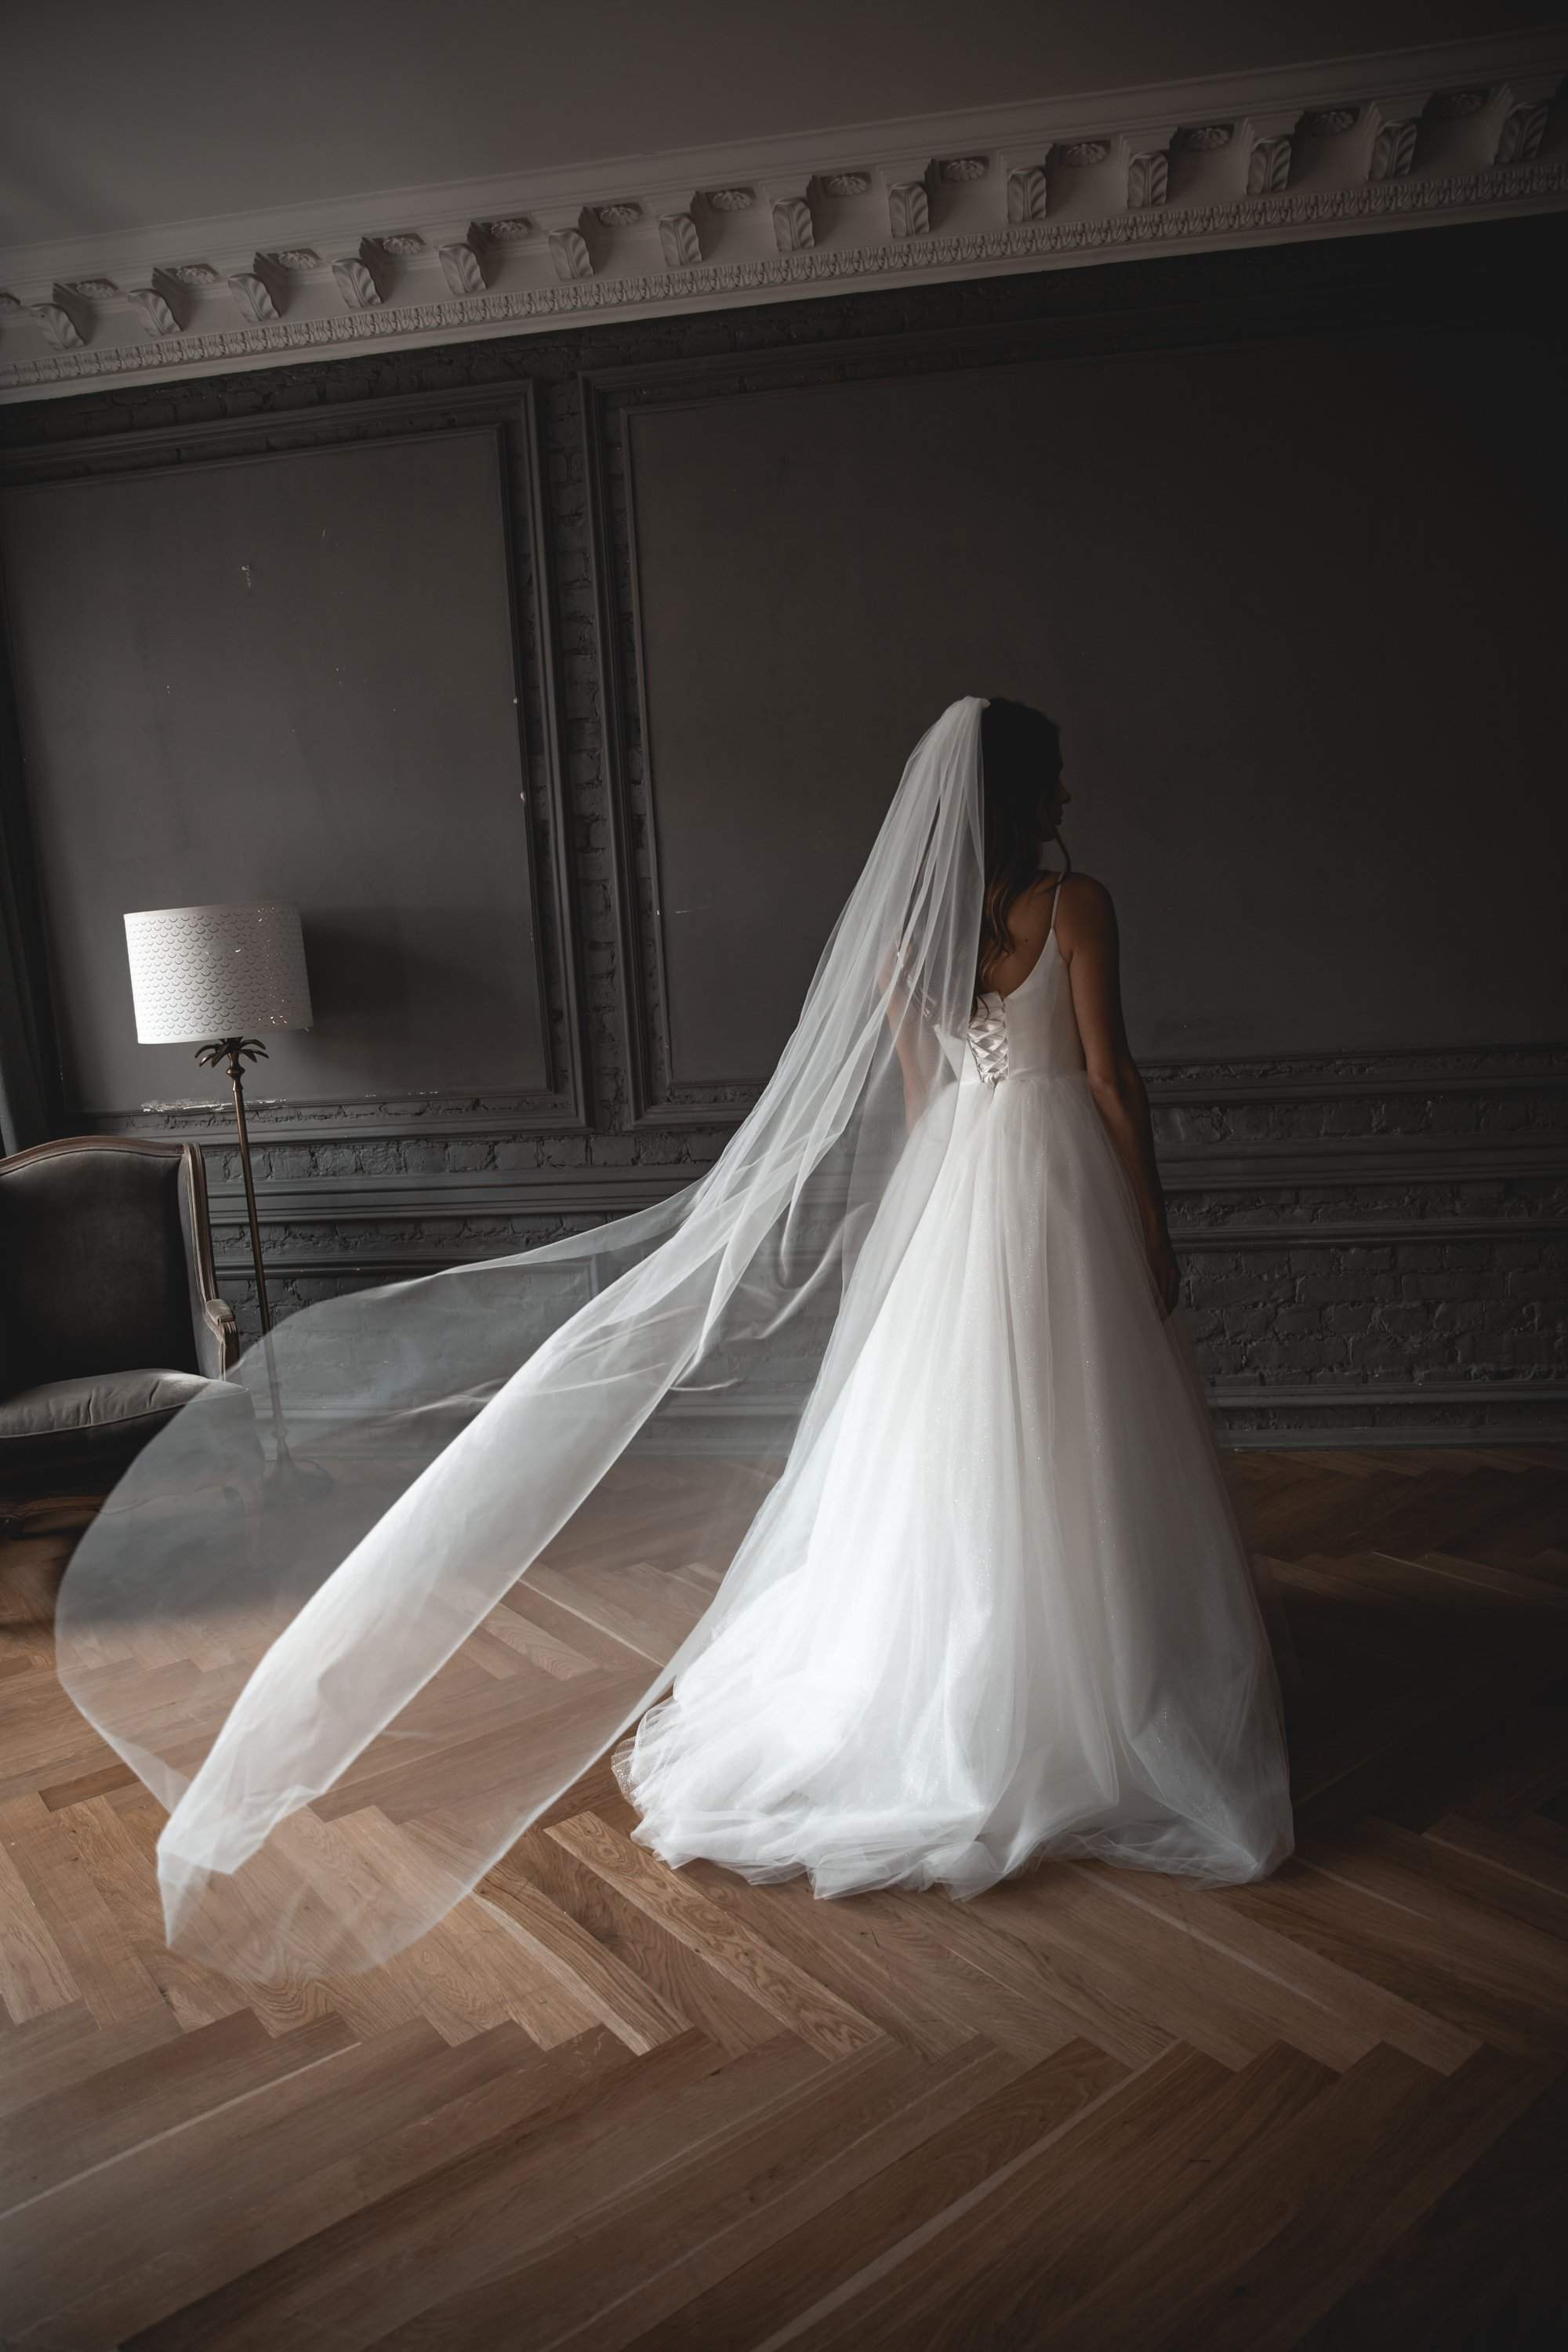 Tulle Bridal Veils